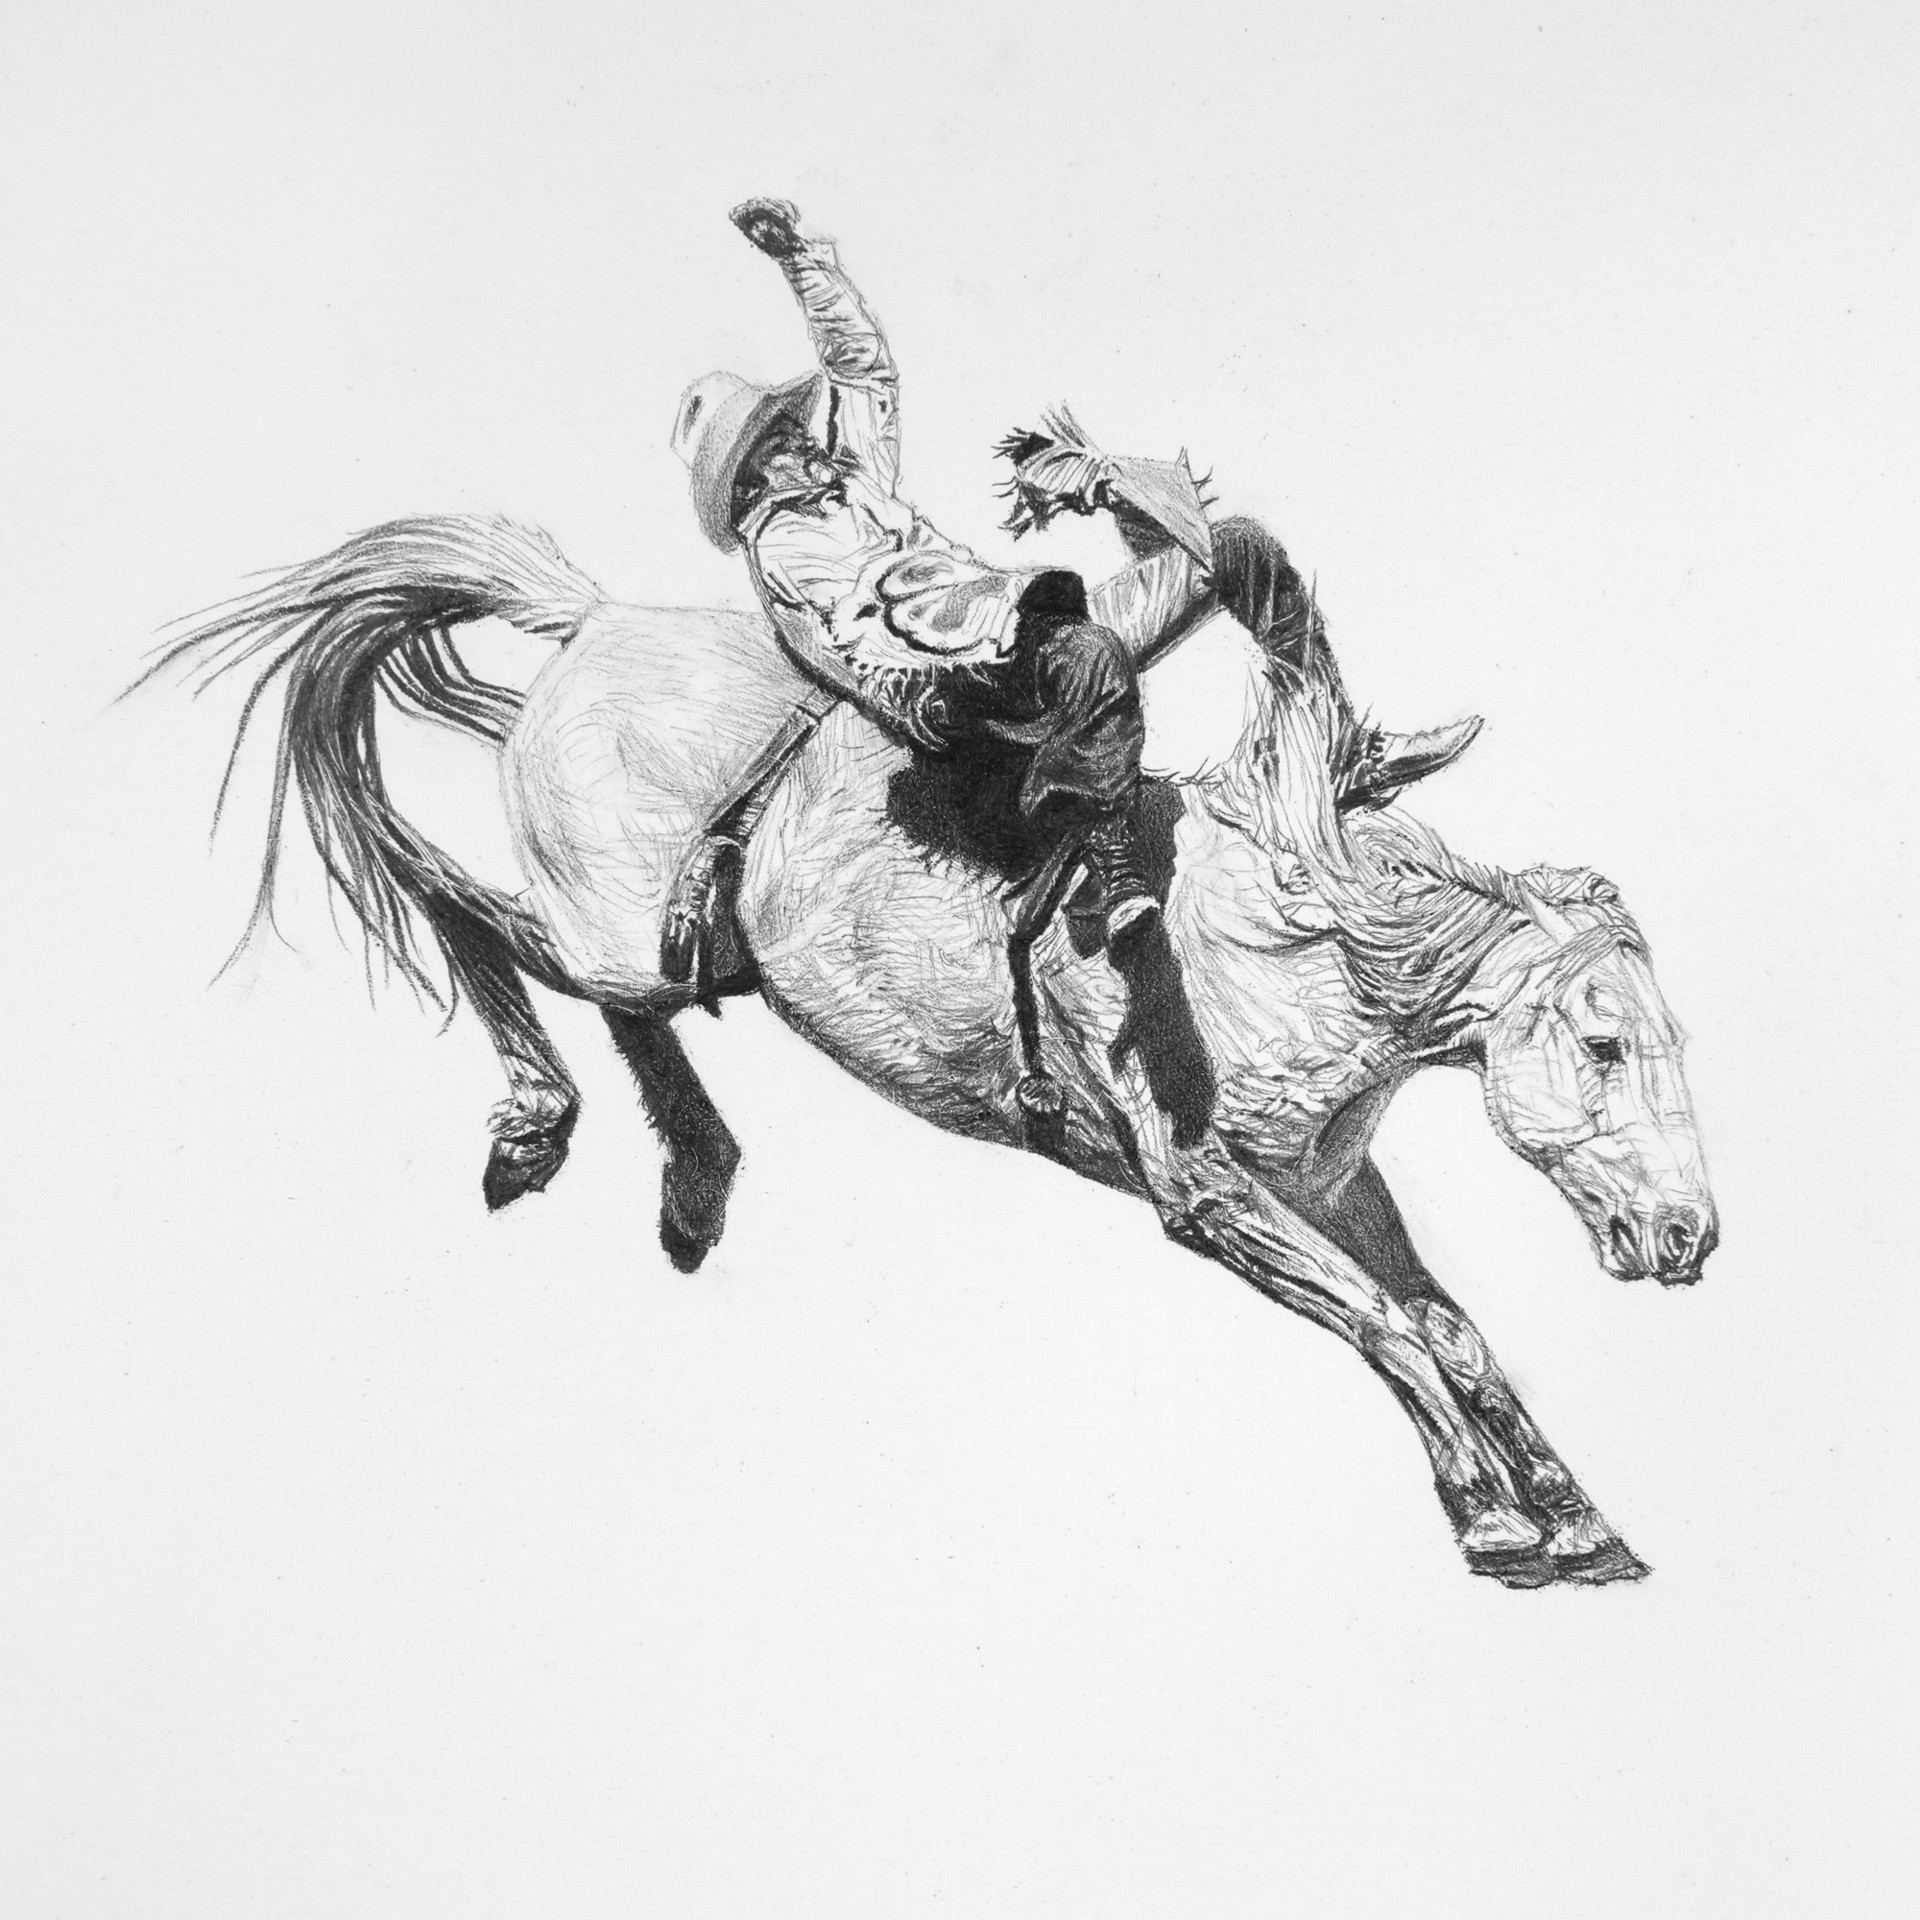 Untitled (Bronc Rider)#6406 by Clayton Porter